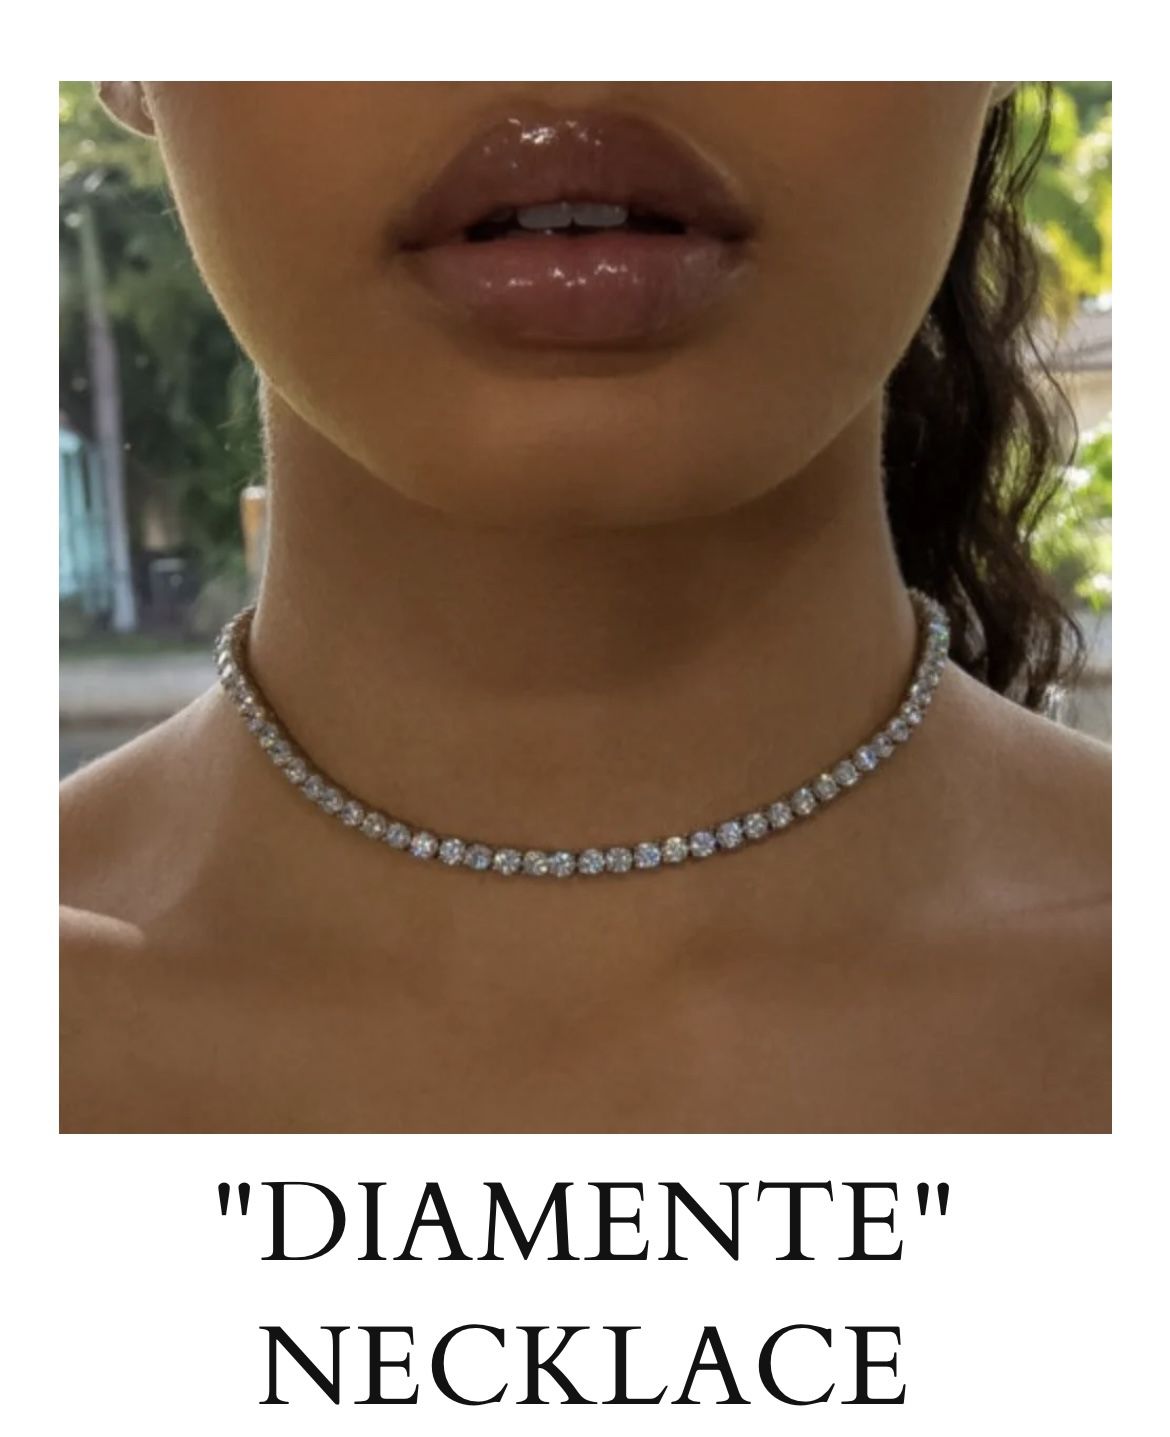 Diamond Style Choker Necklace 